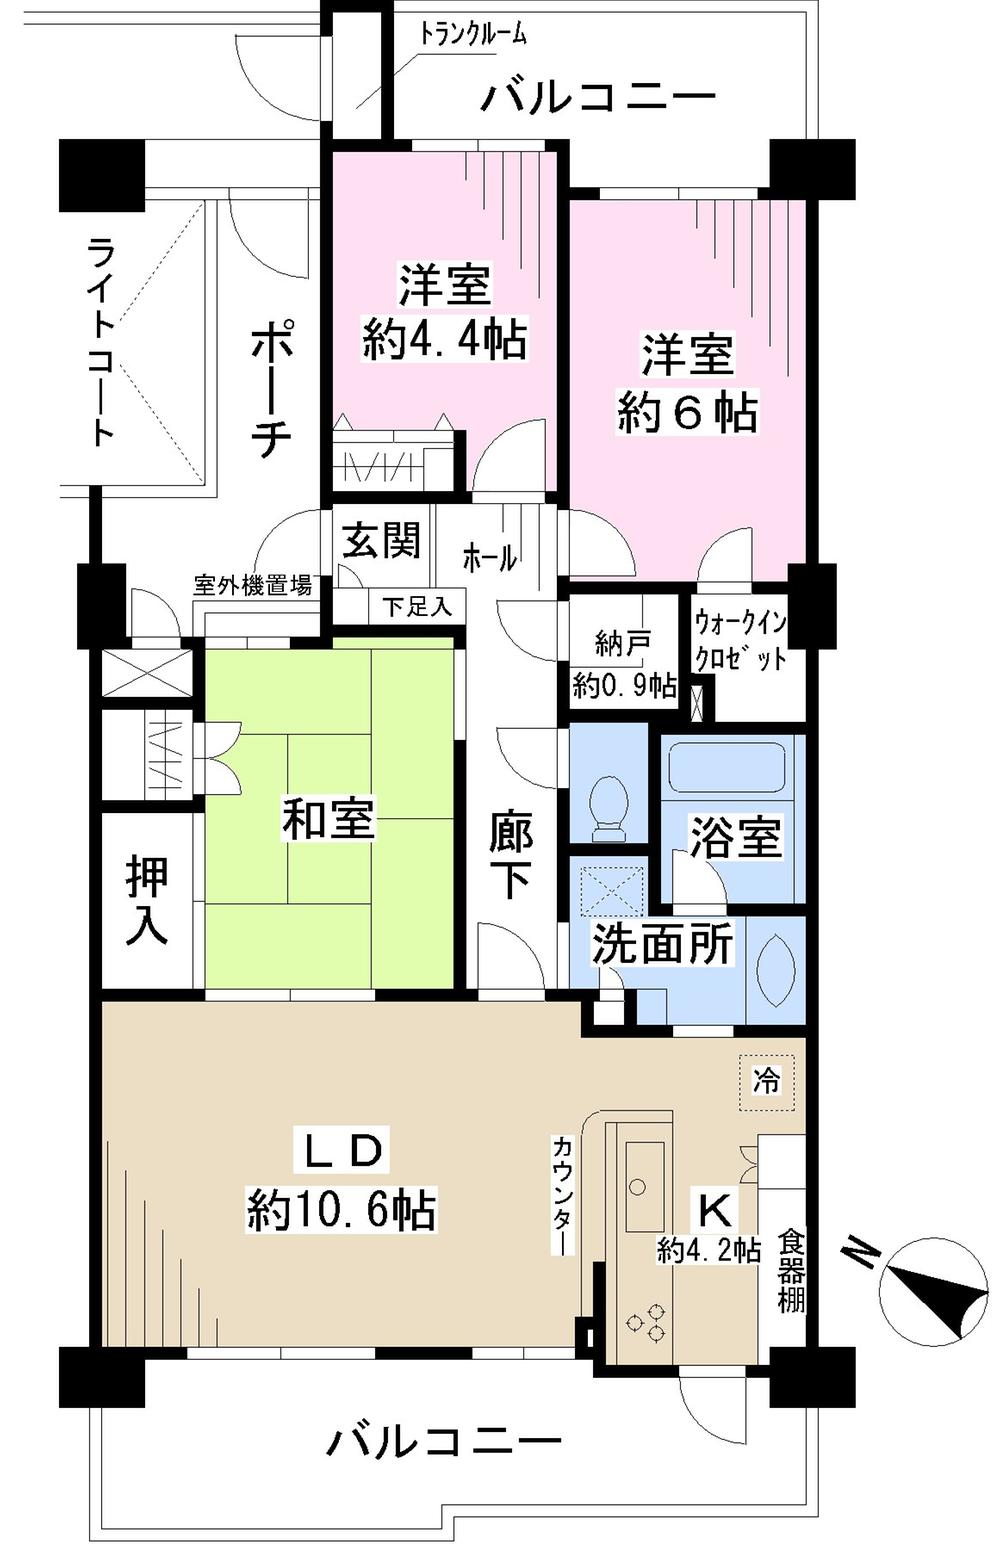 Floor plan. 3LDK, Price 21.5 million yen, Occupied area 73.15 sq m , Balcony area 18.22 sq m